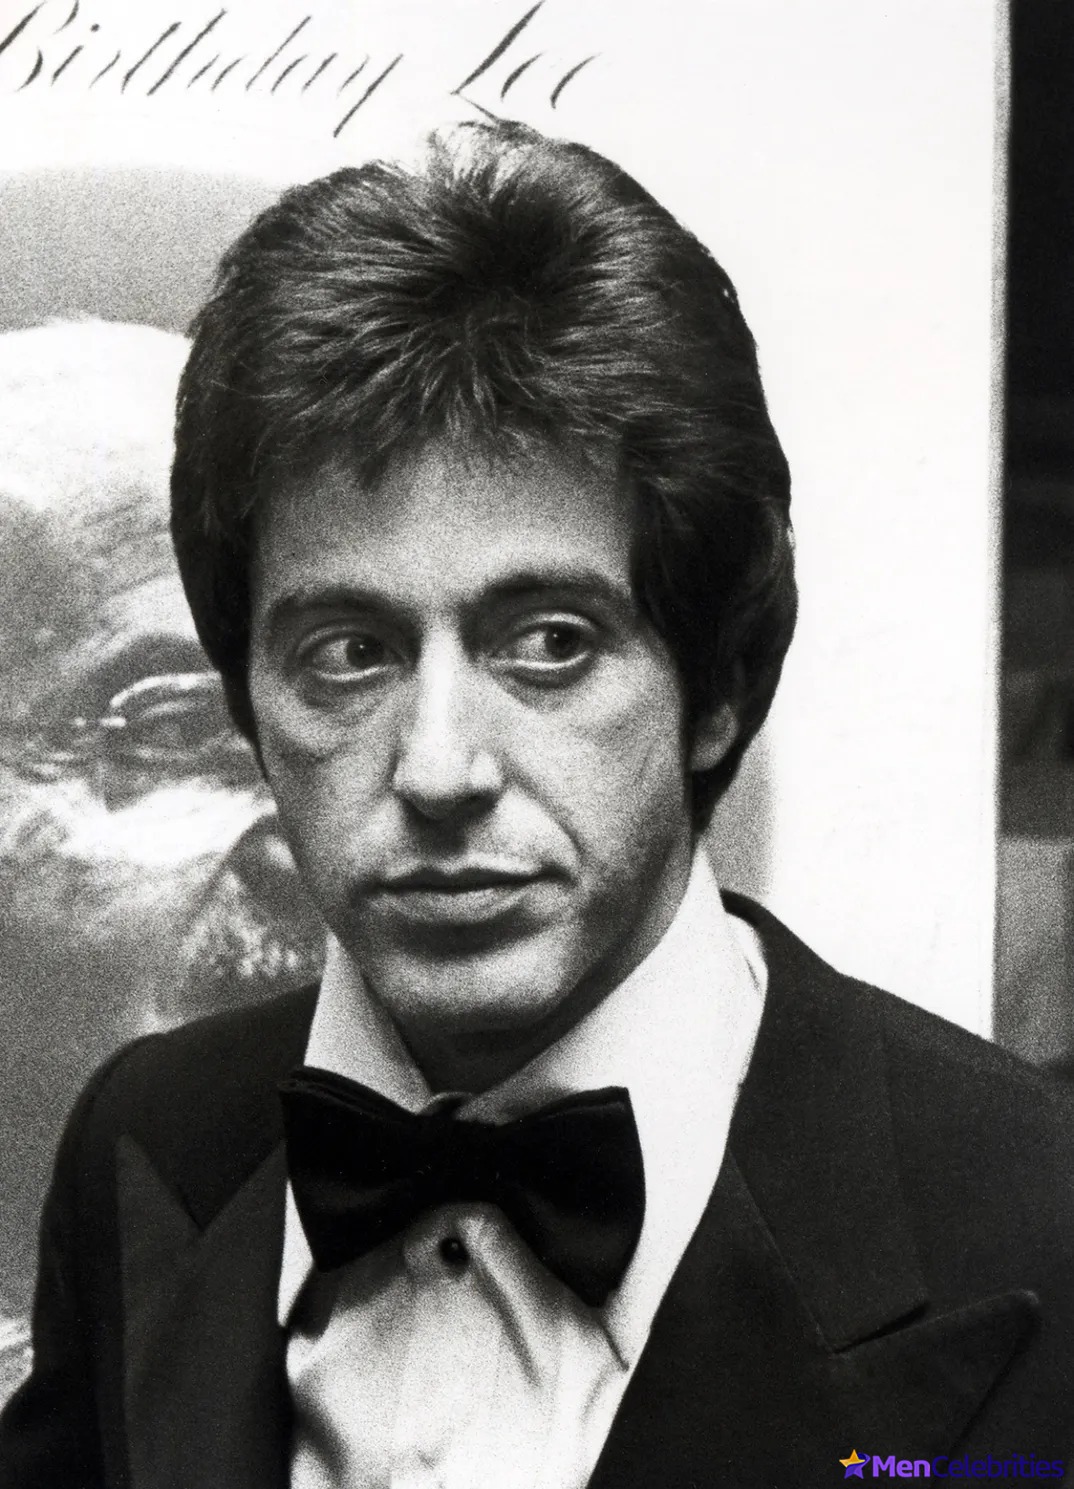 De Niro or Pacino? Who is sexier?